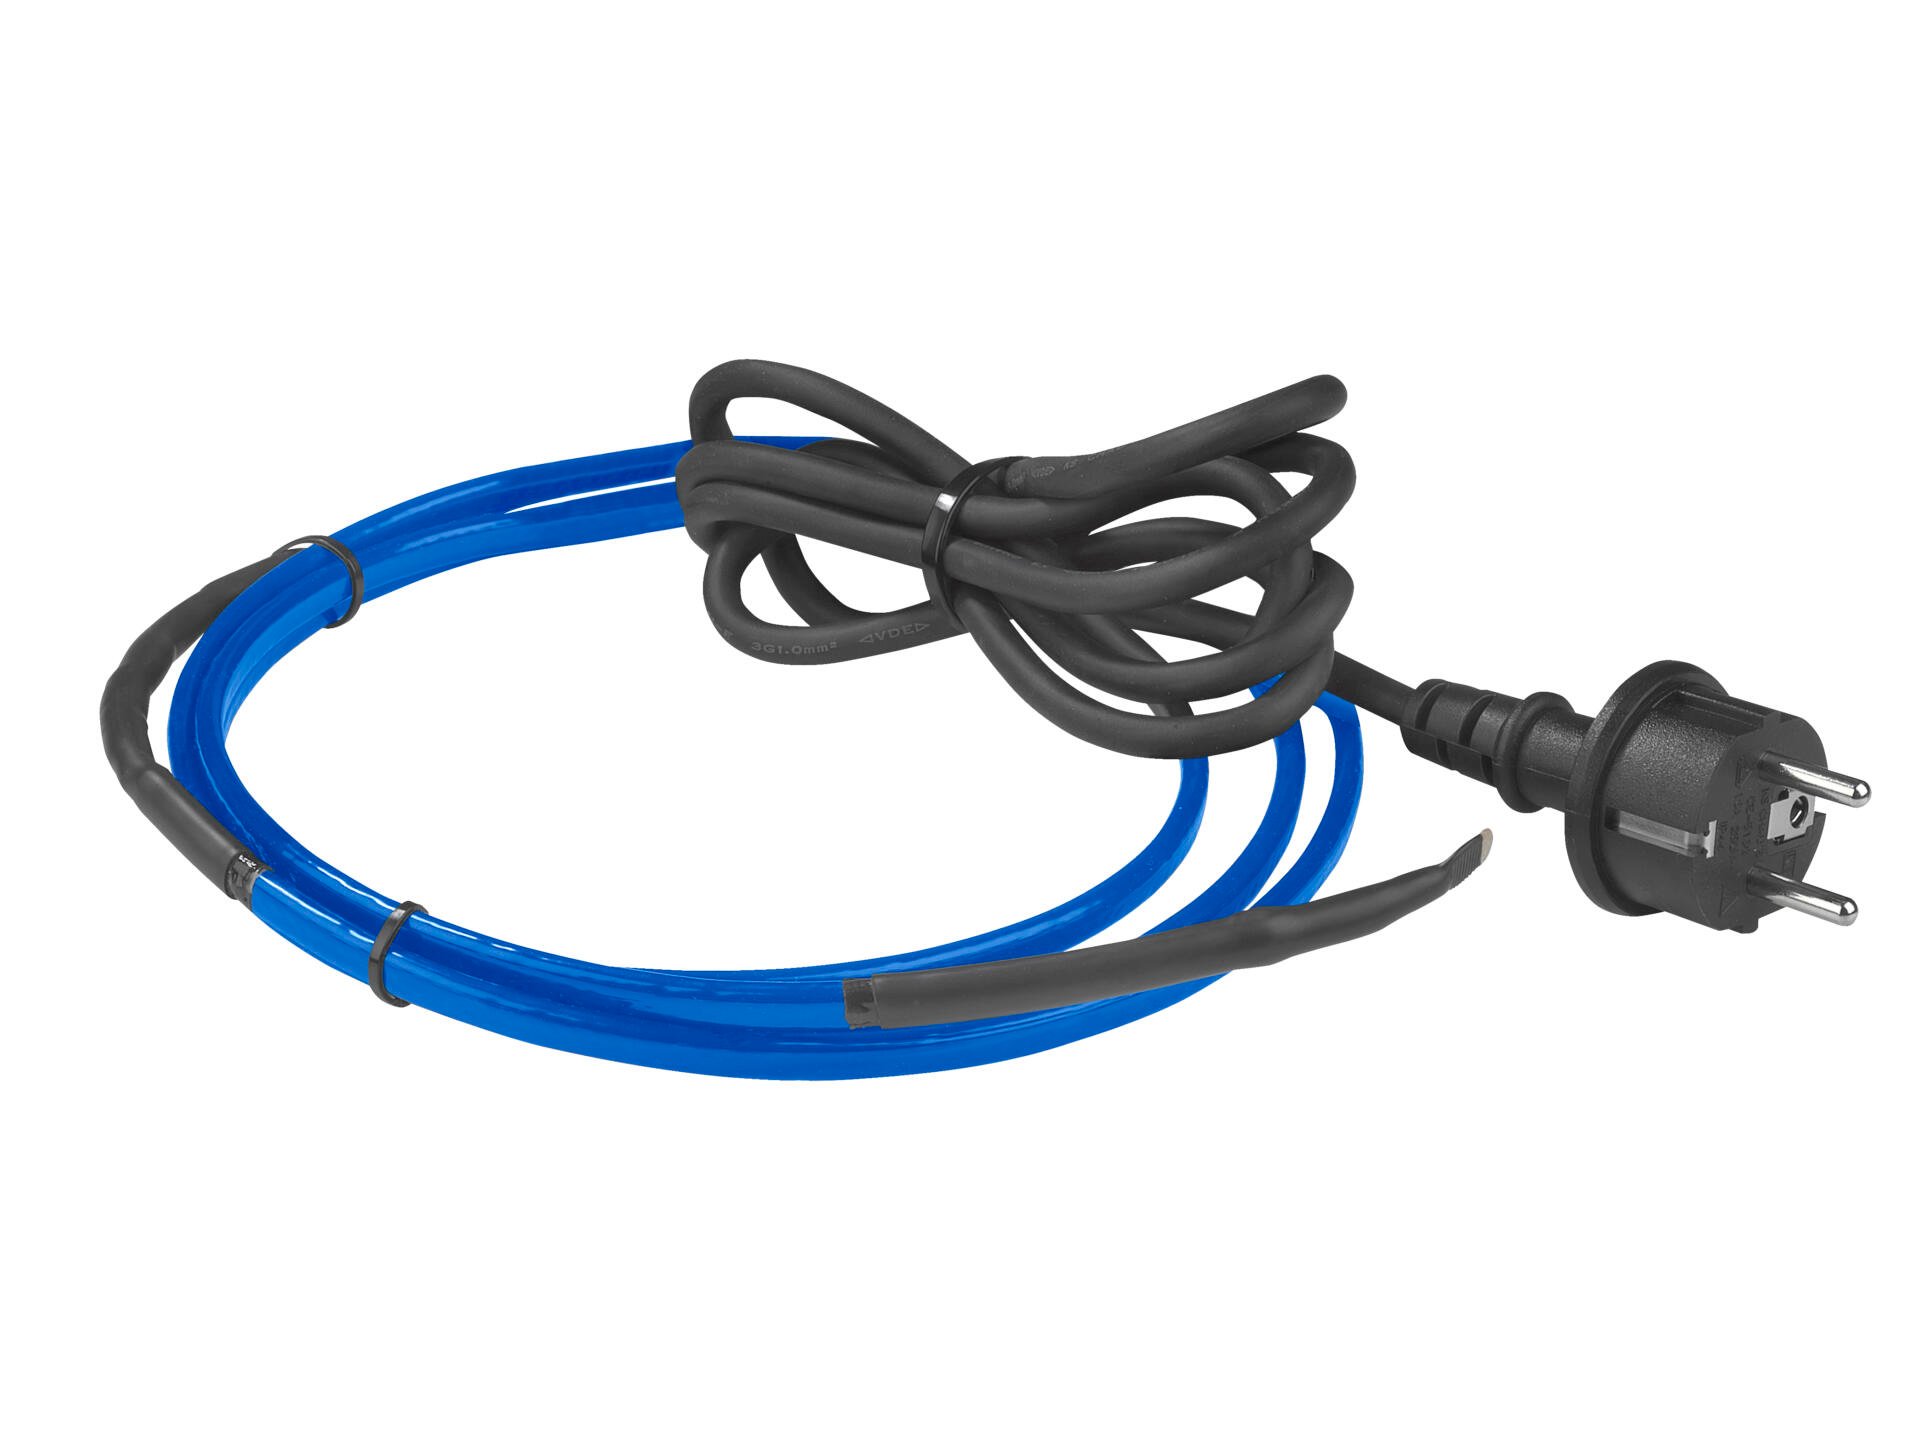 Eurom Pipe Defrost câble chauffant 2m bleu